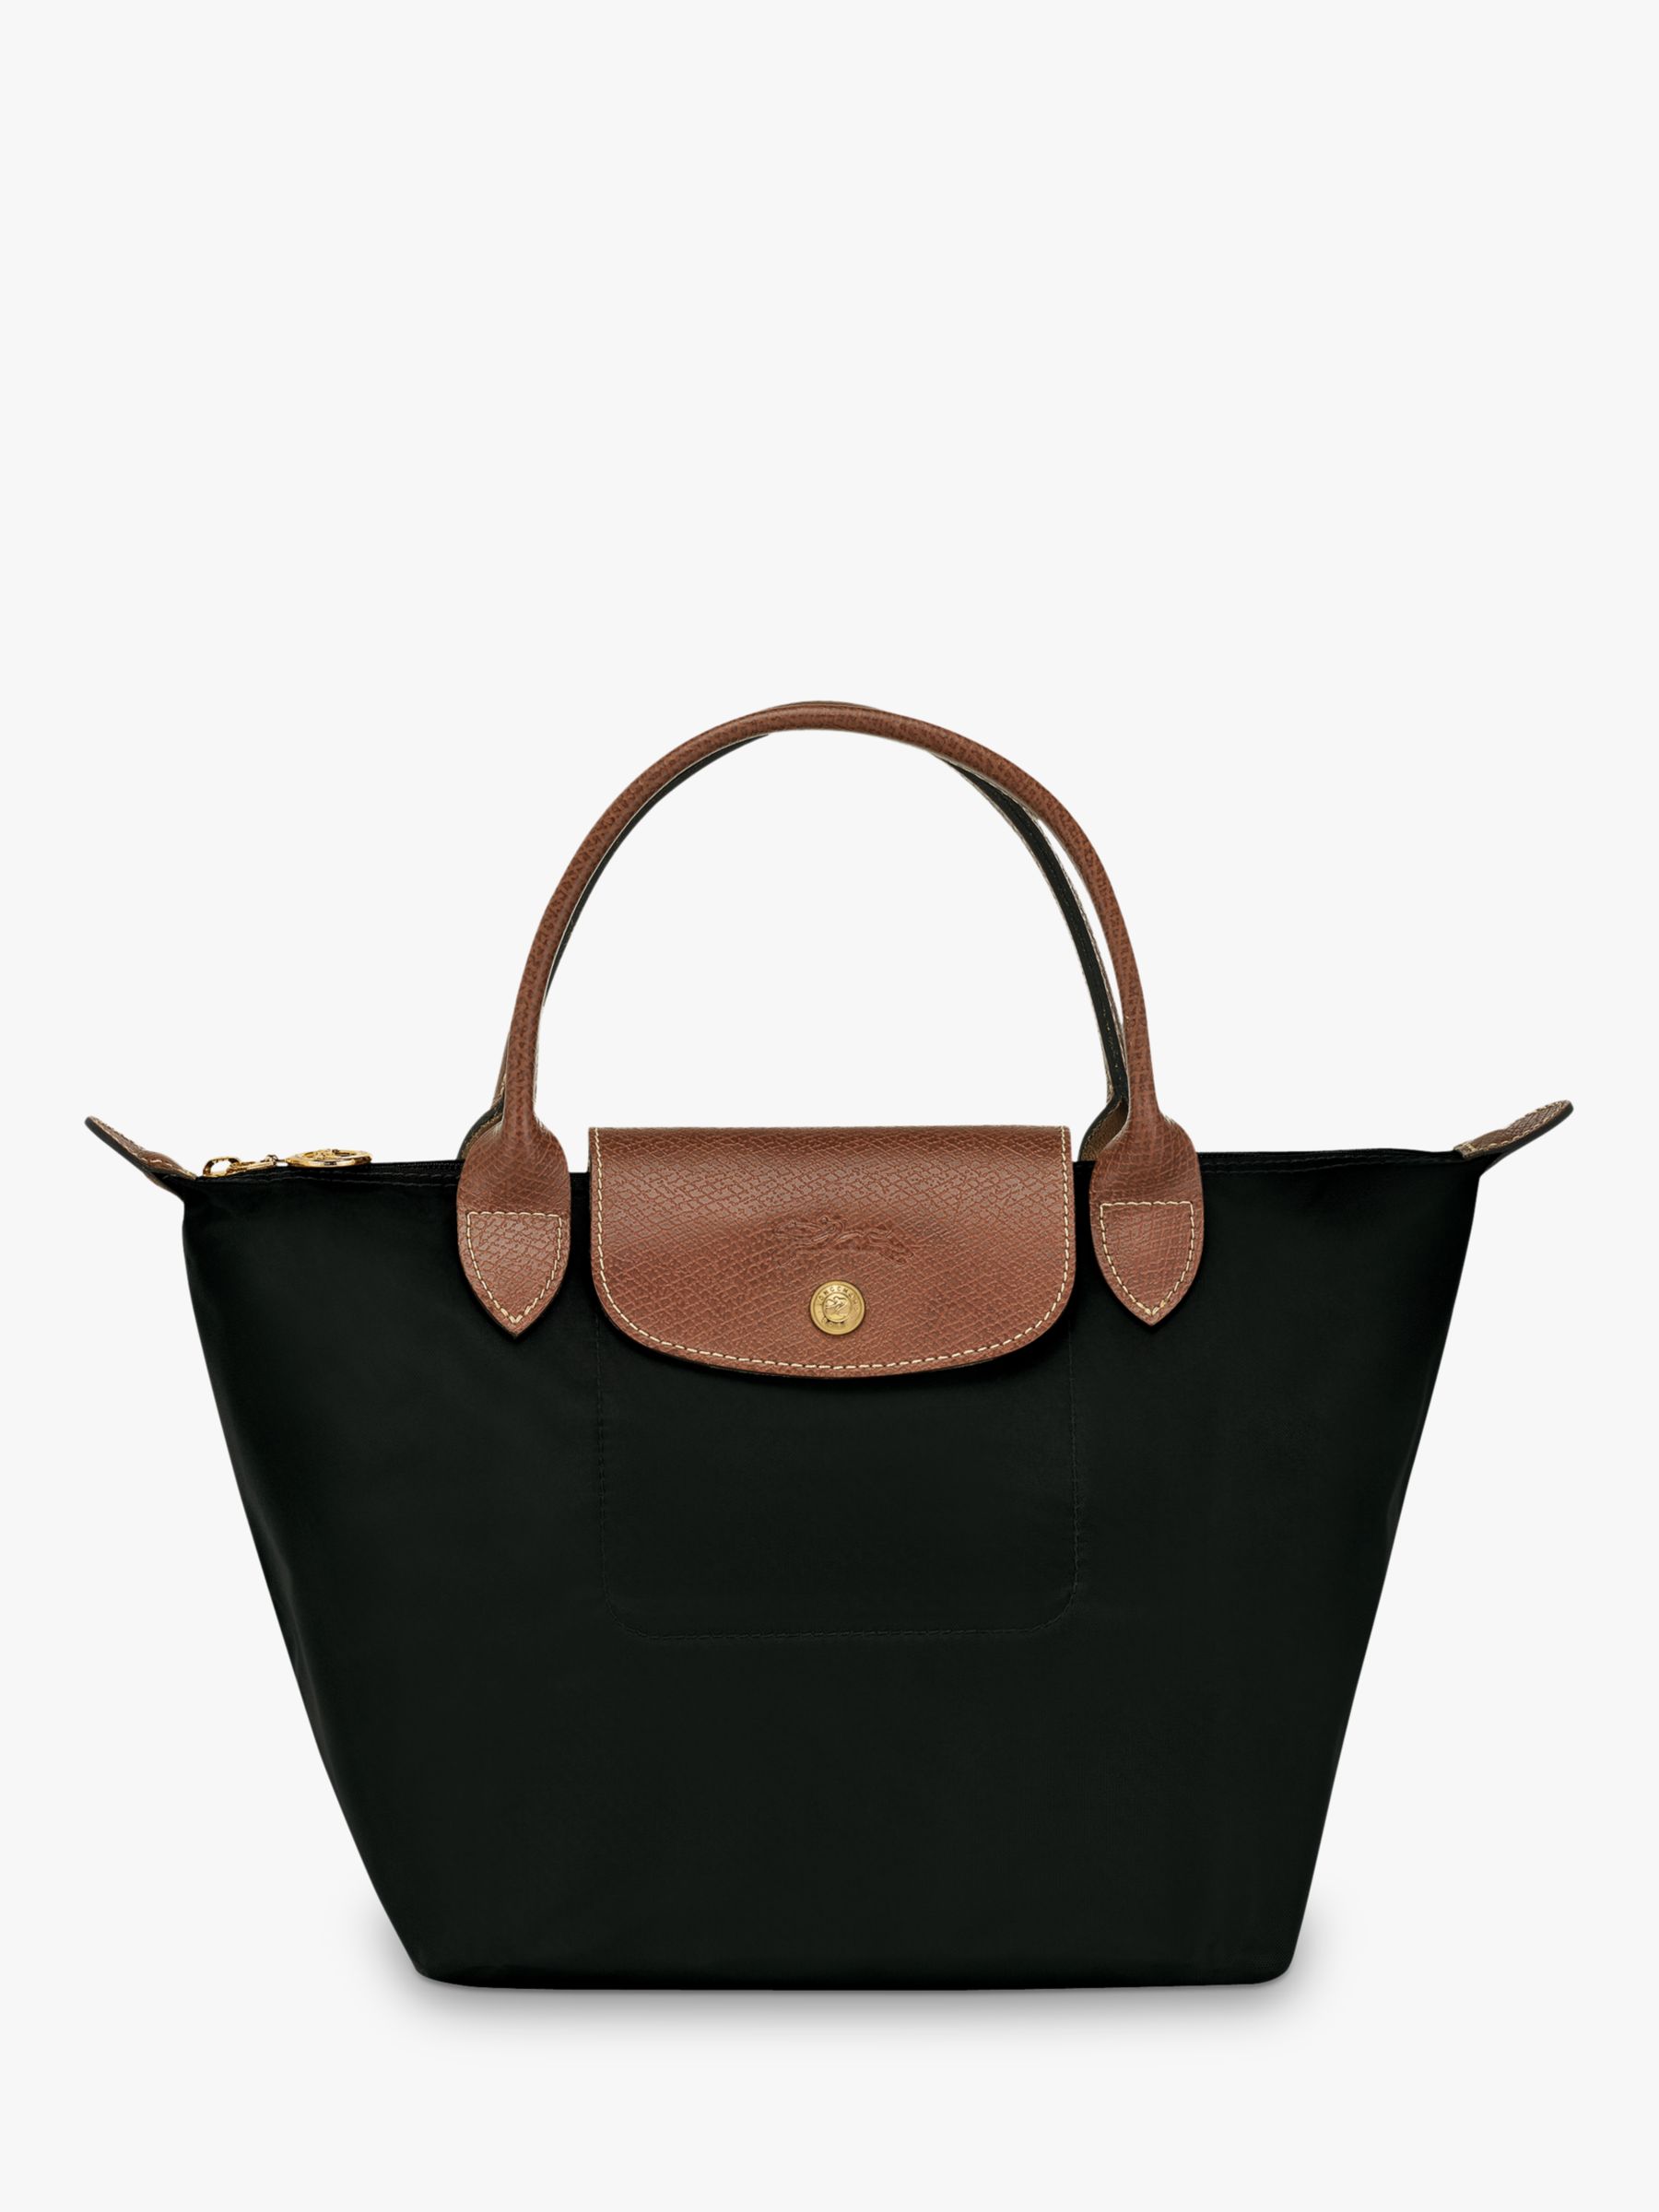 Longchamp Le Pliage Original Small Top Handle Bag, Black